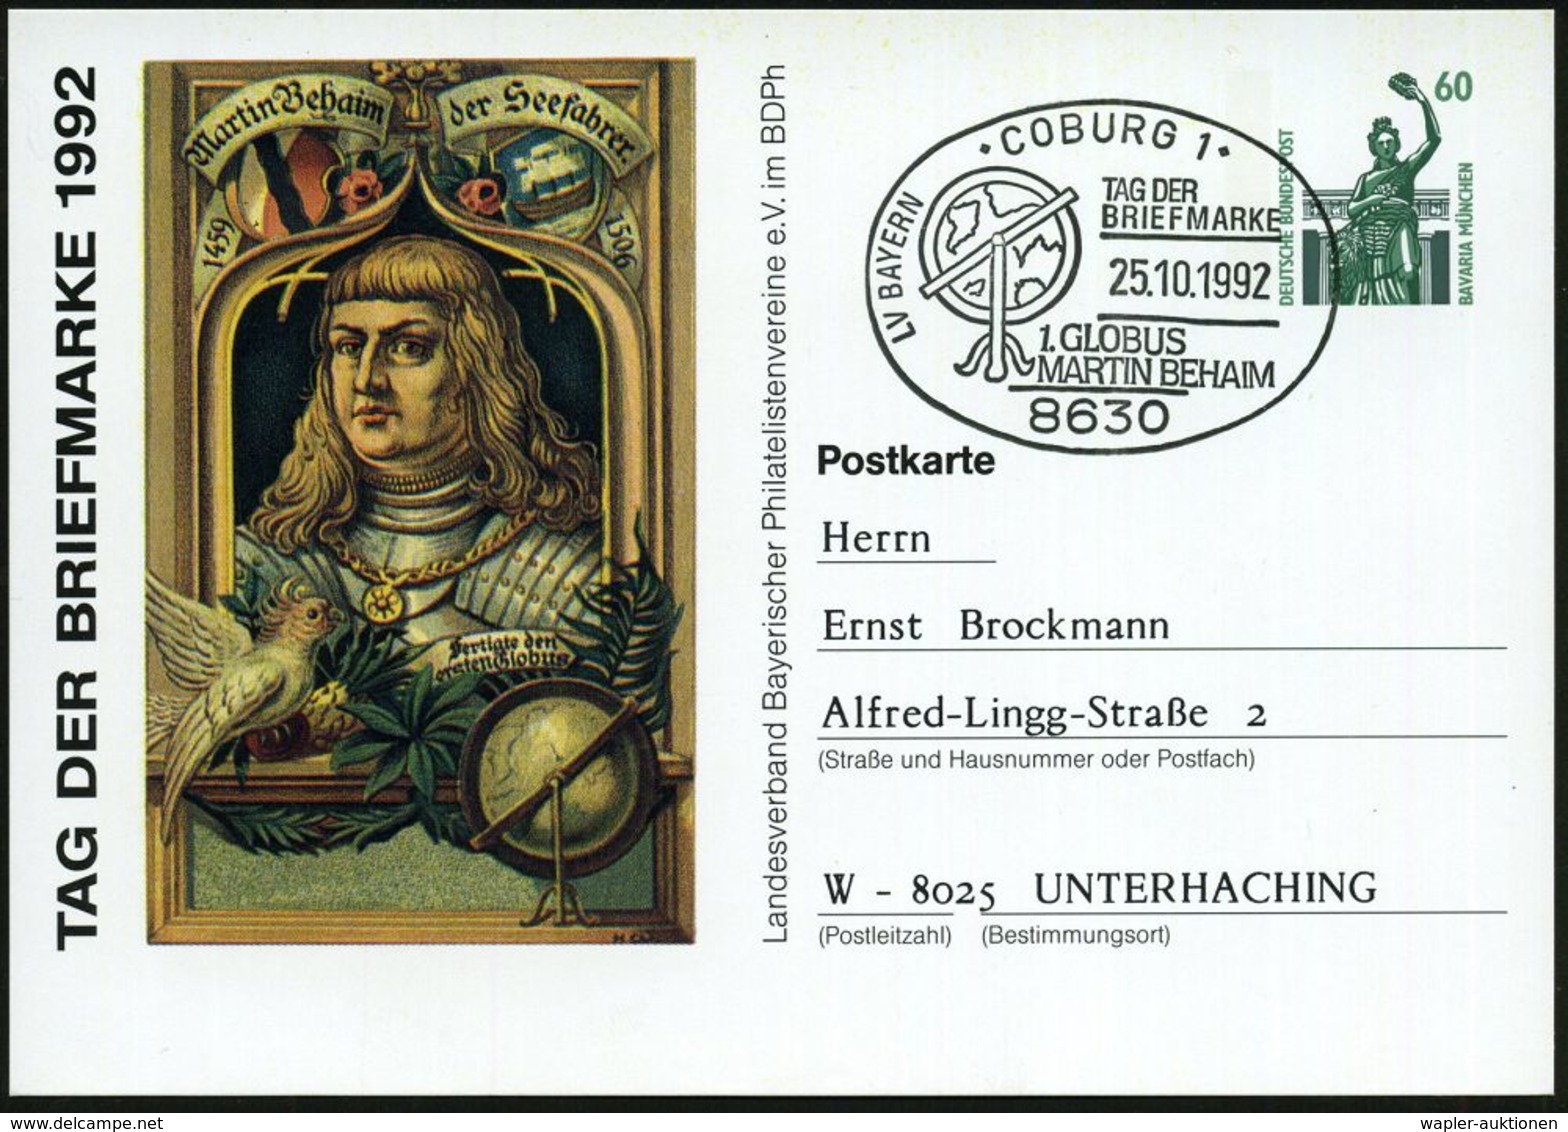 8630 COBURG 1/ TAG DER/ BRIEFMARKE/ 1.GLOBUS/ MARTIN BEHAIM 1992 (25.10.) SSt = Behaim-Globus Auf Motivgl. PP 60 Pf. Bav - Aardrijkskunde